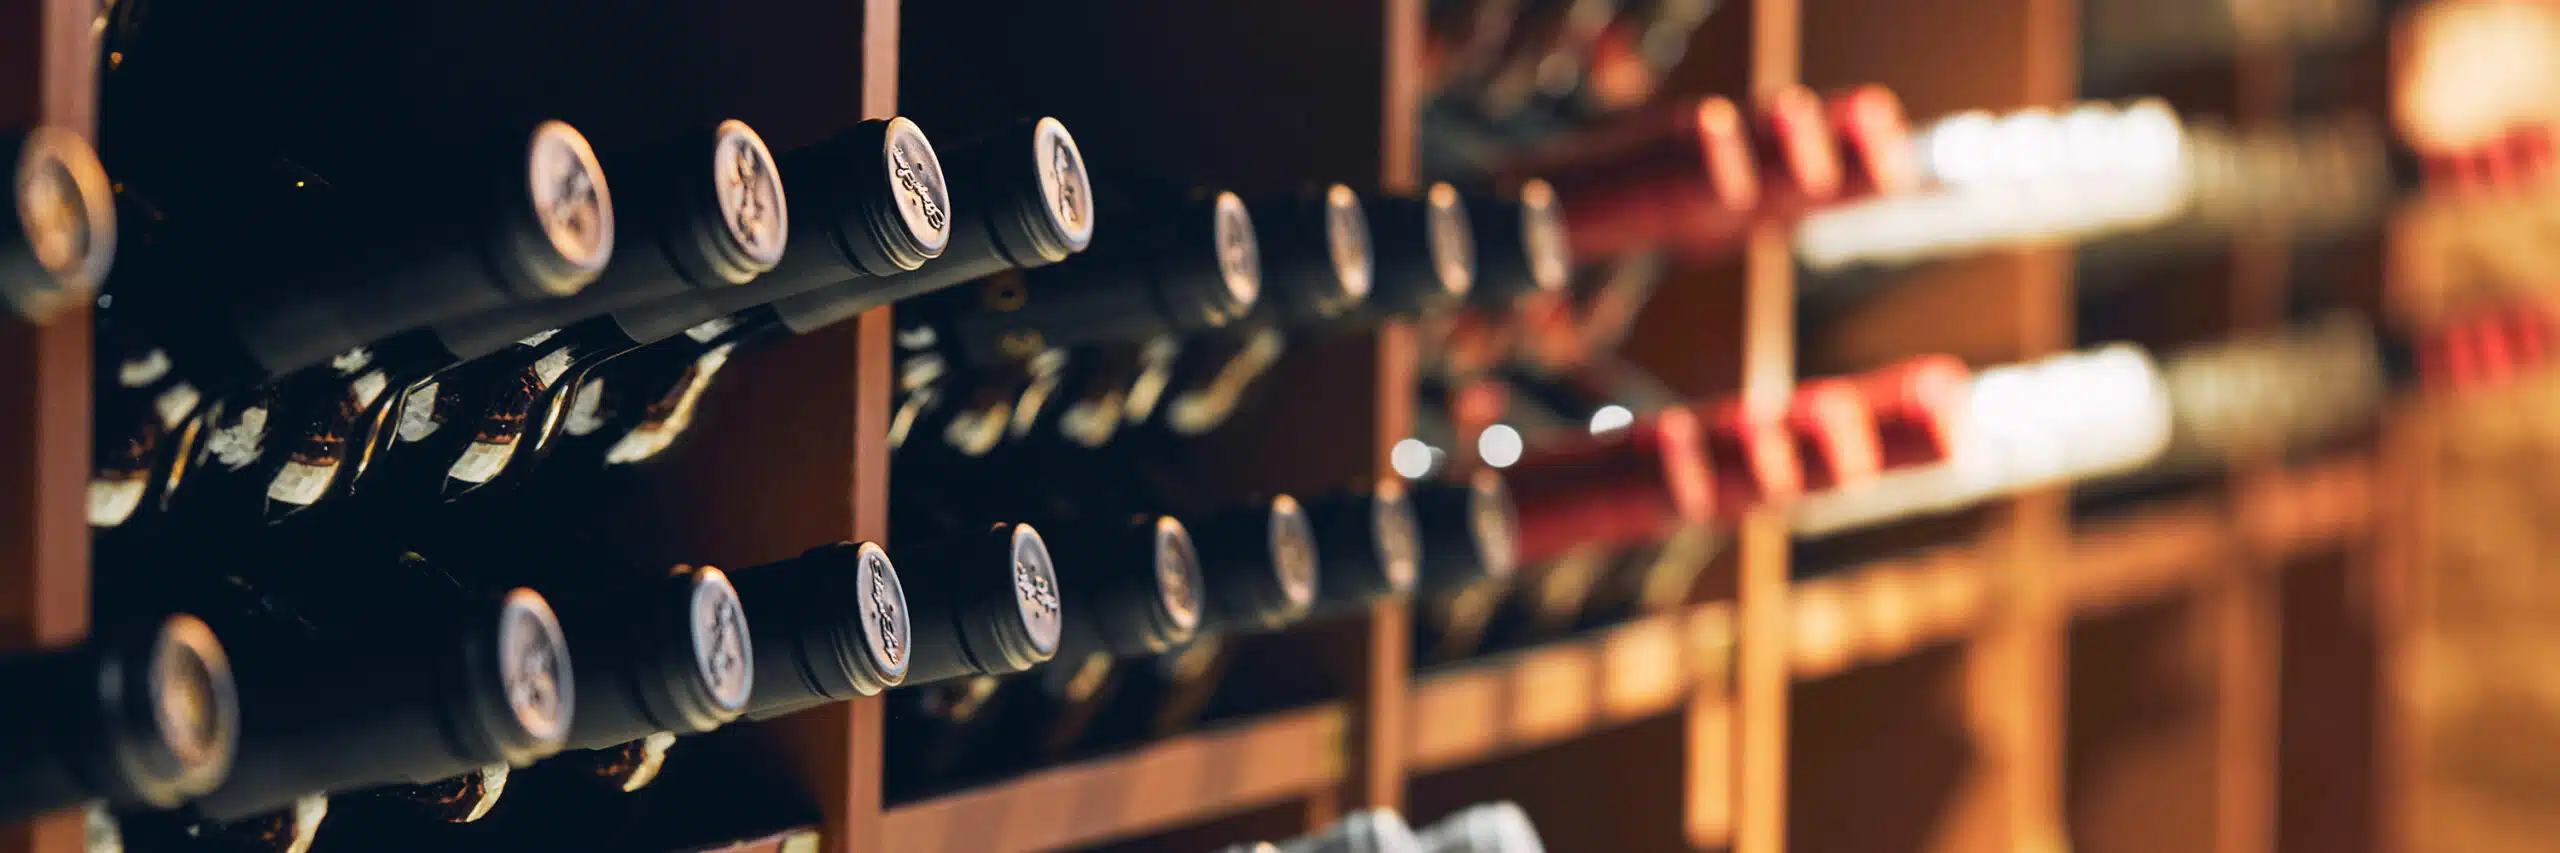 Wine bottles in cellar